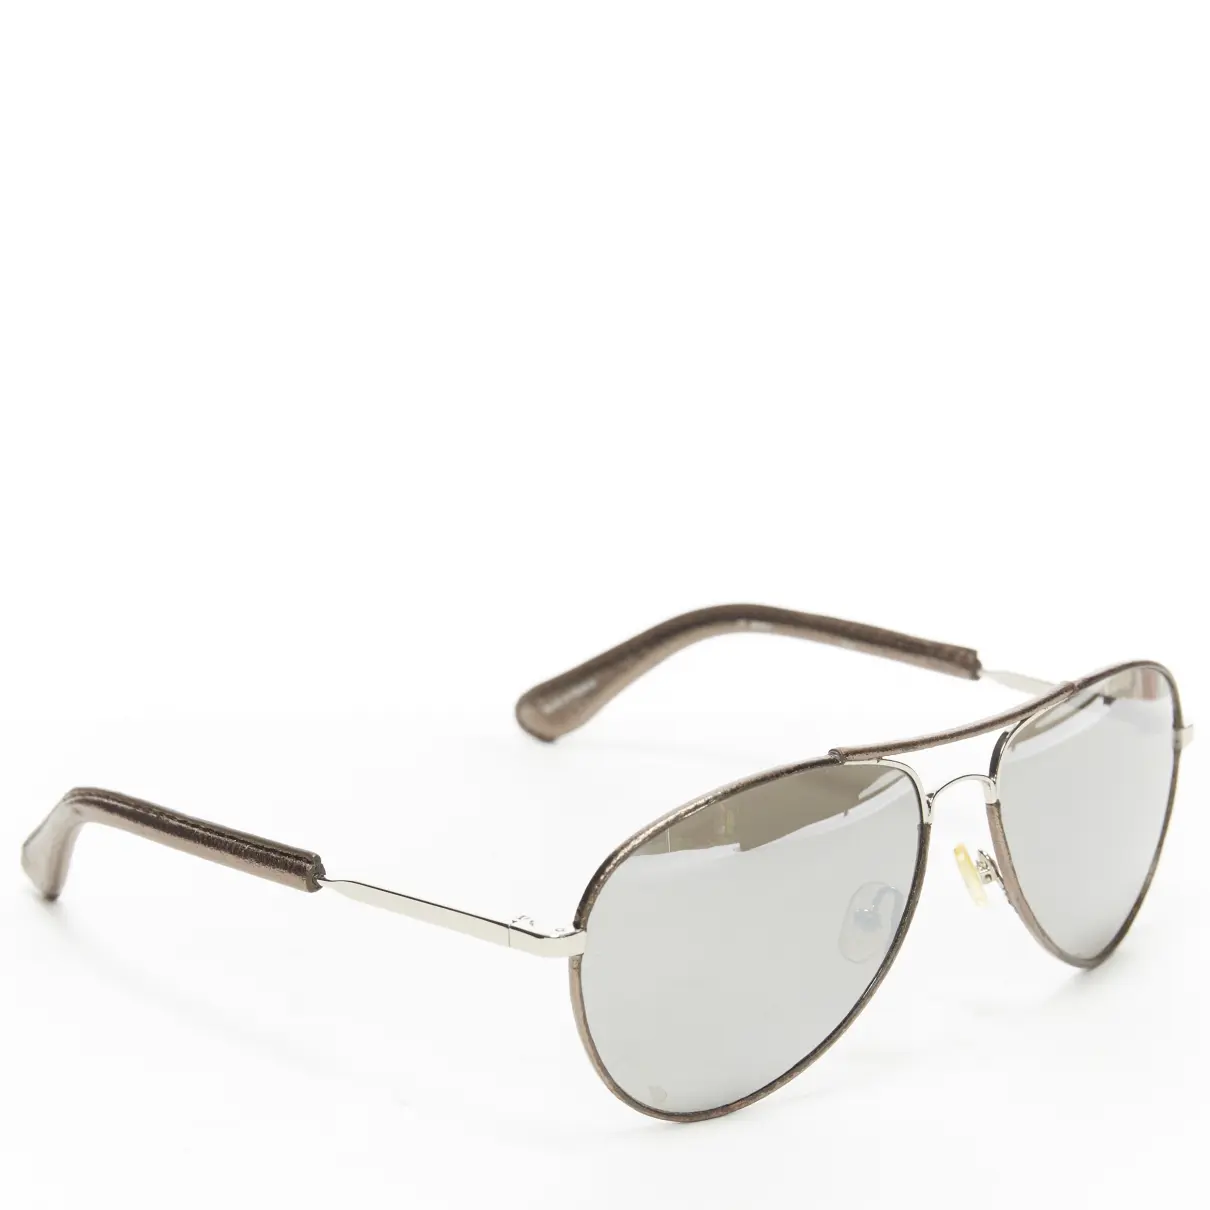 Buy Linda Farrow Aviator sunglasses online - Vintage